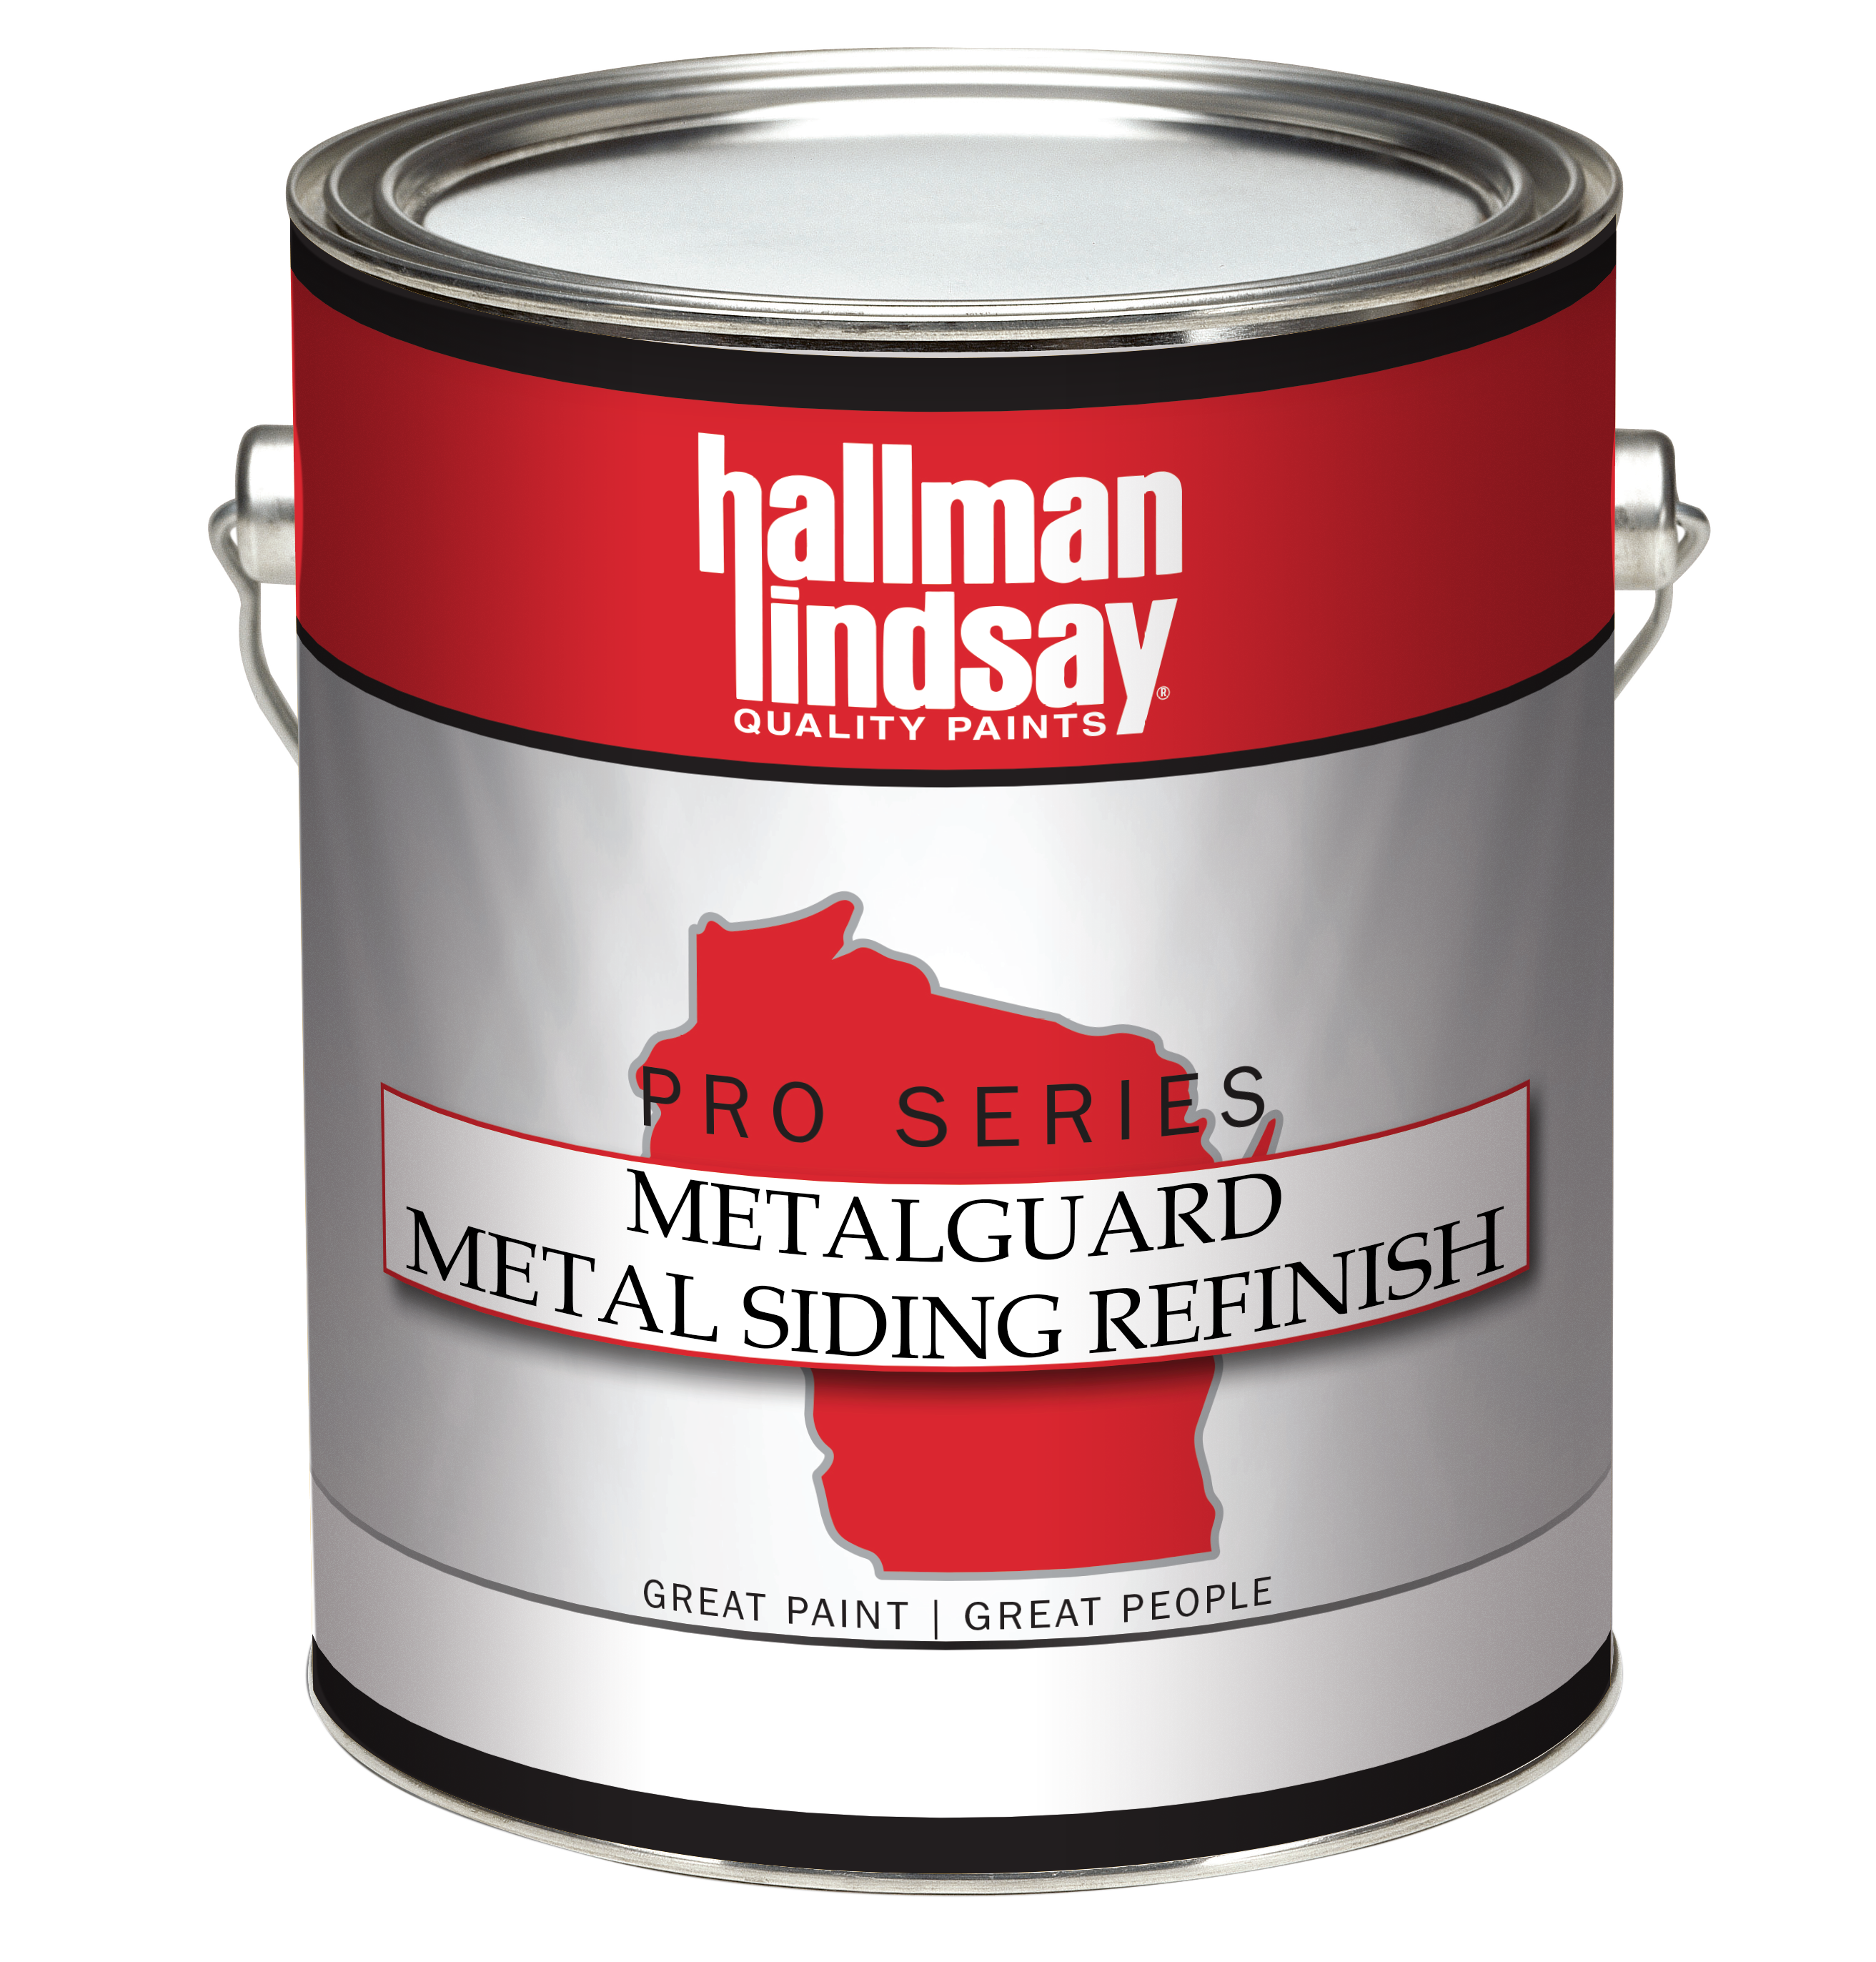 Hallman Lindsay  METALGUARD - METAL SIDING REFINISH 178 Premium 100%  Acrylic Metal Siding Re-Finish